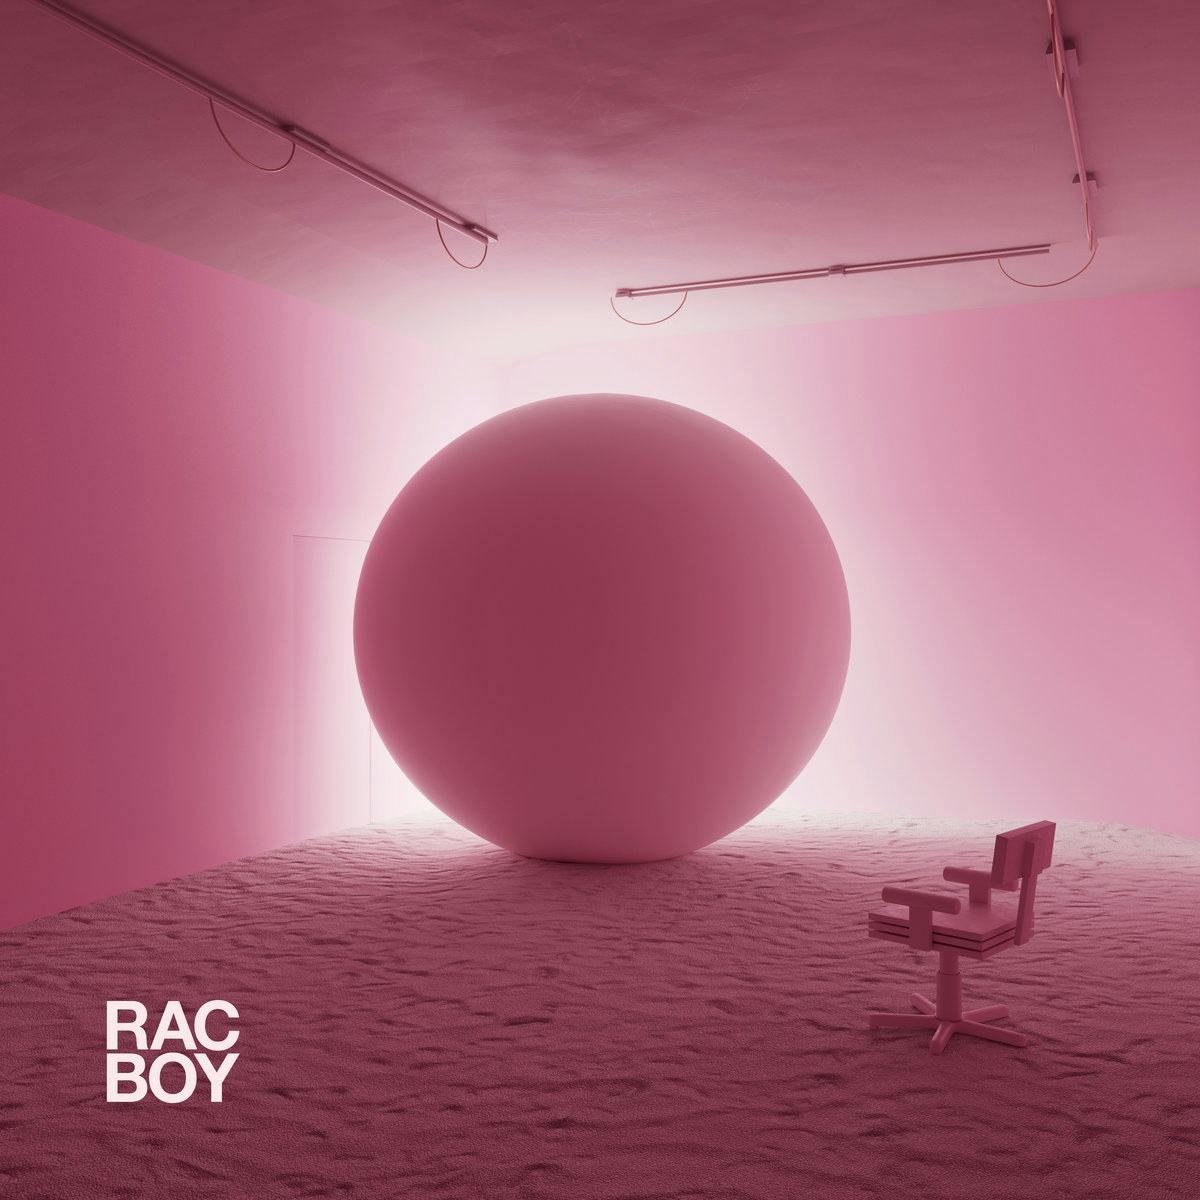 Cover art for RAC's most recent solo album, BOY